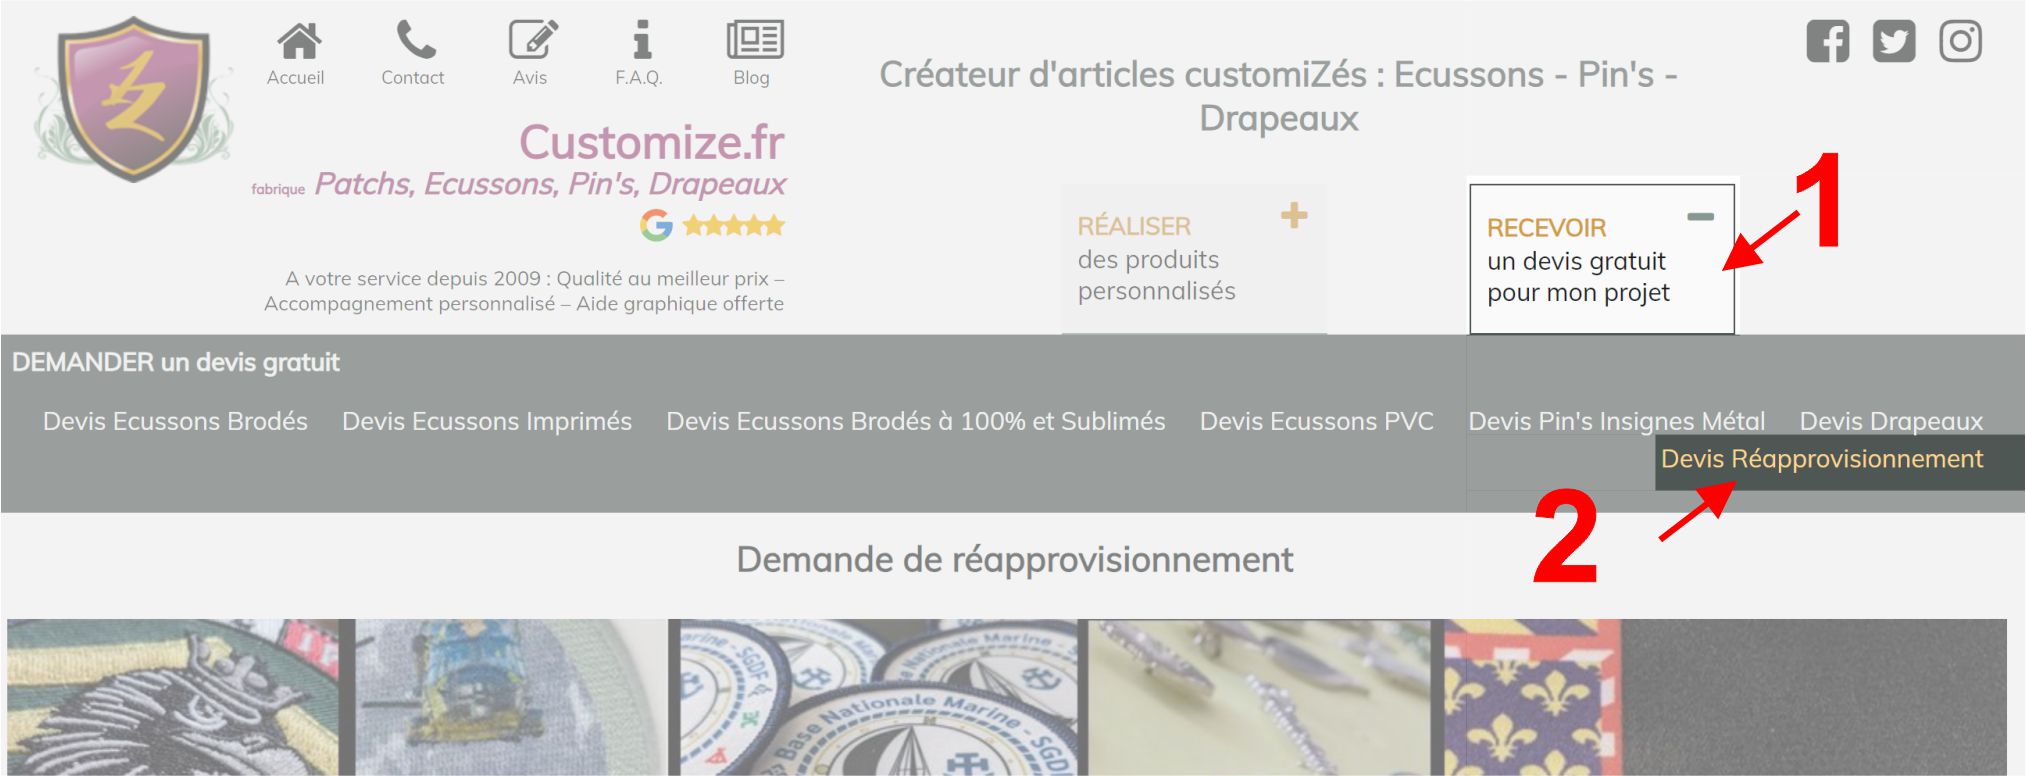 Le blog de customize.fr